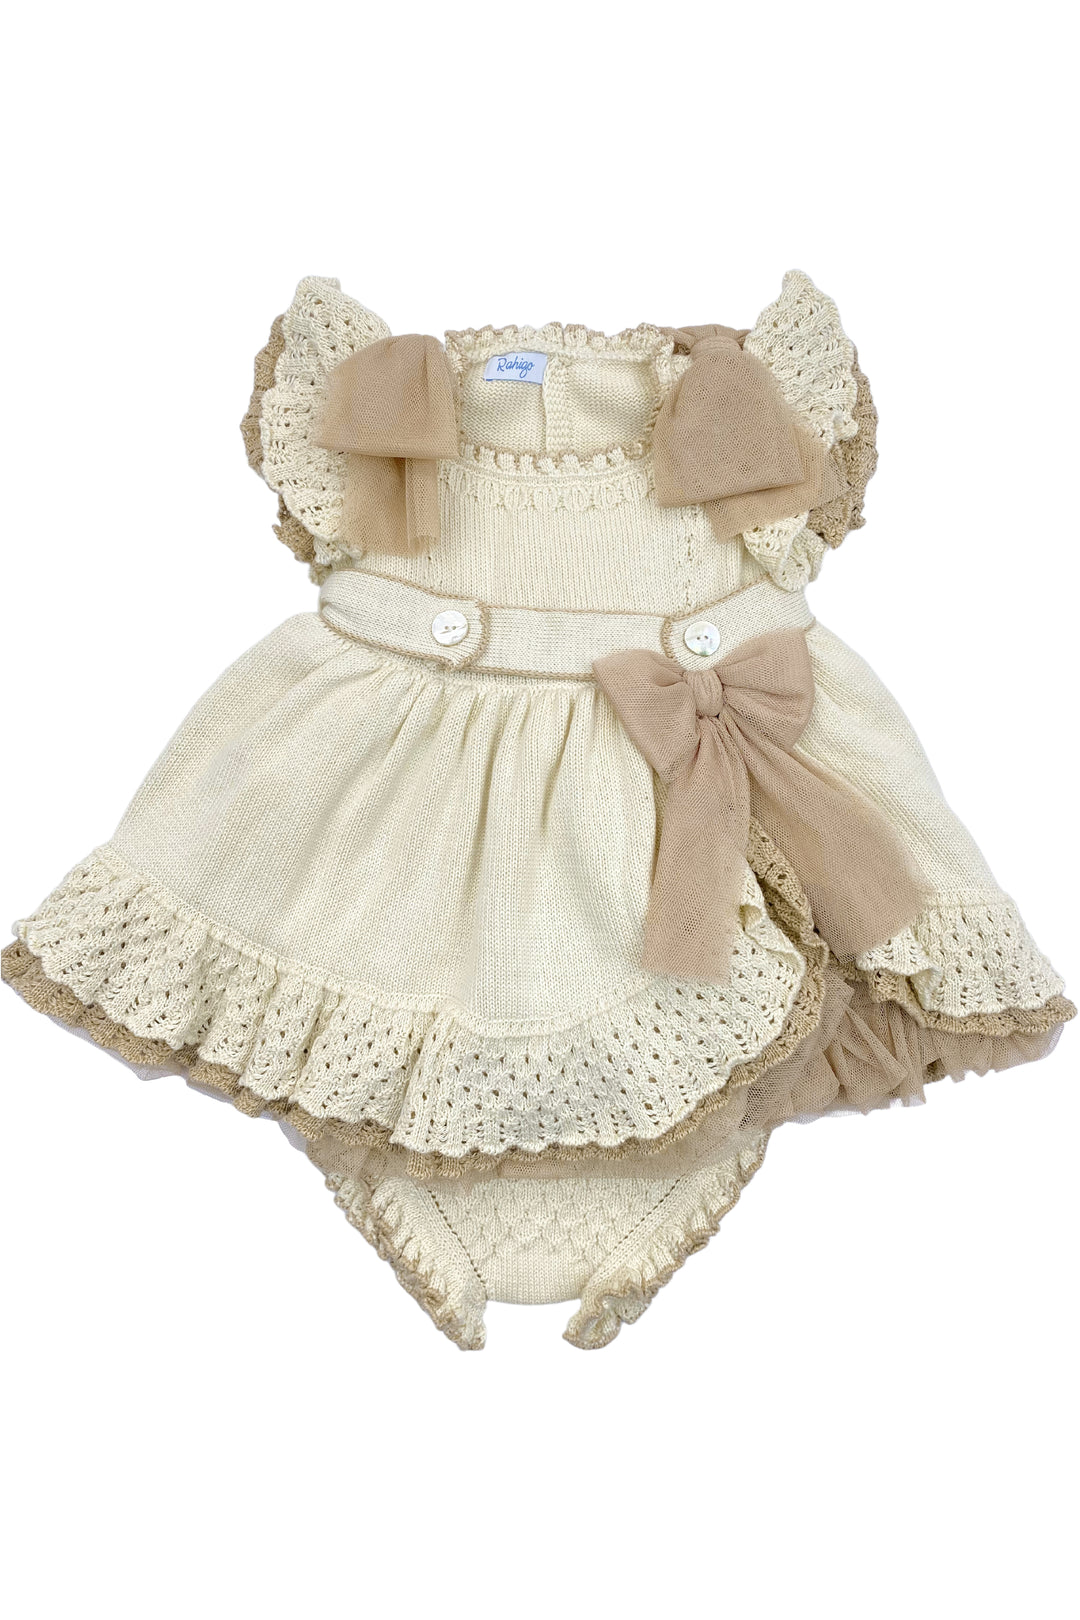 Rahigo "Beatrice" Cream & Camel Knit Tulle Dress & Bloomers | Millie and John